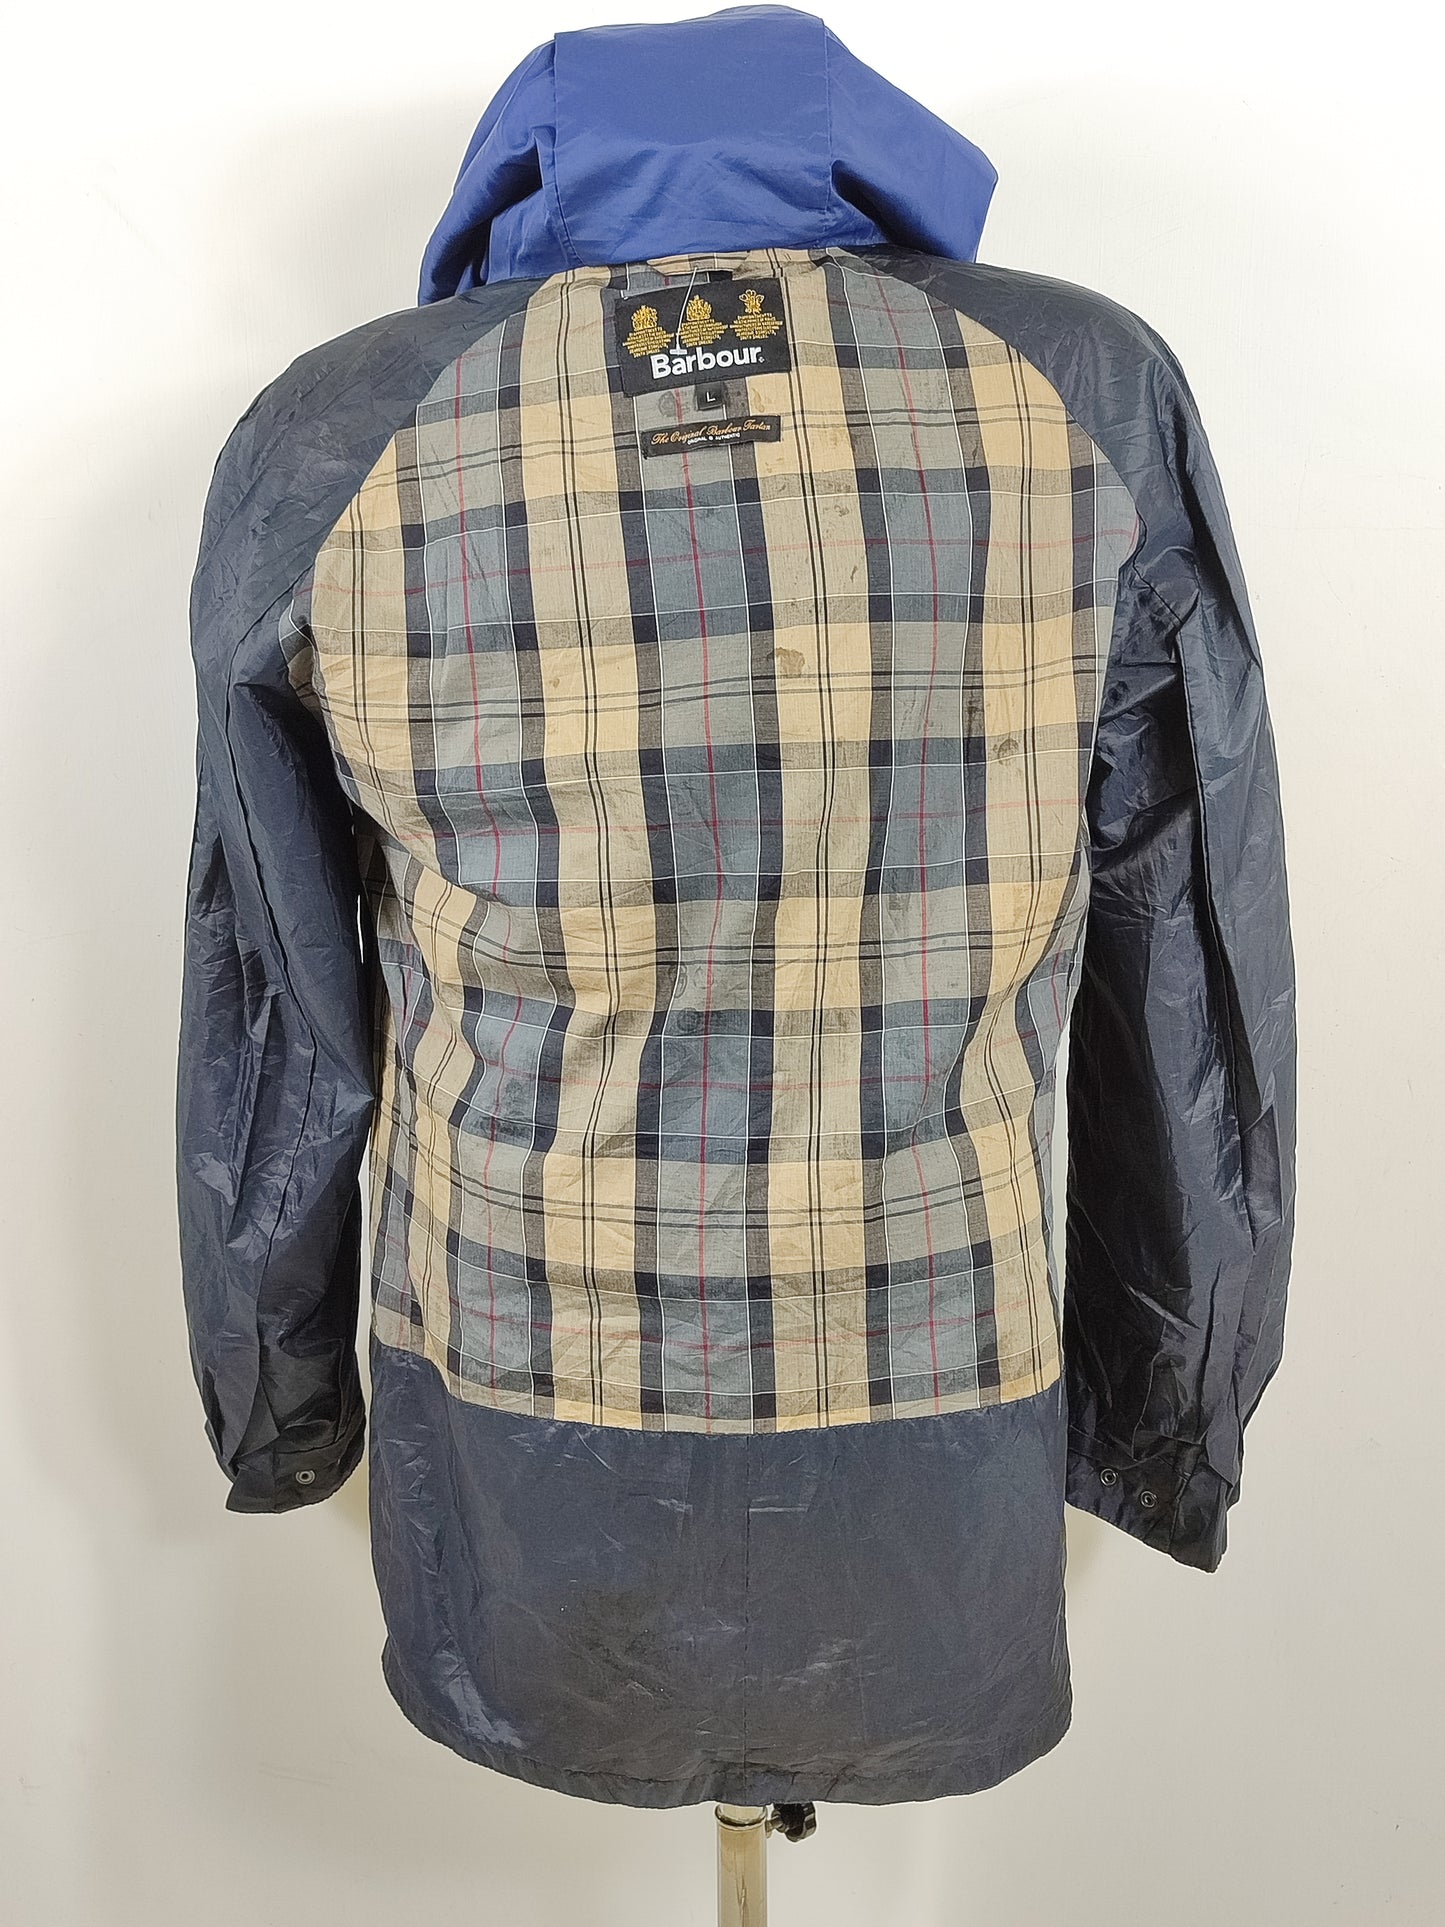 Giacca Barbour Blu Cavendish da uomo Large -Man Navy Cavendish Jacket size Large